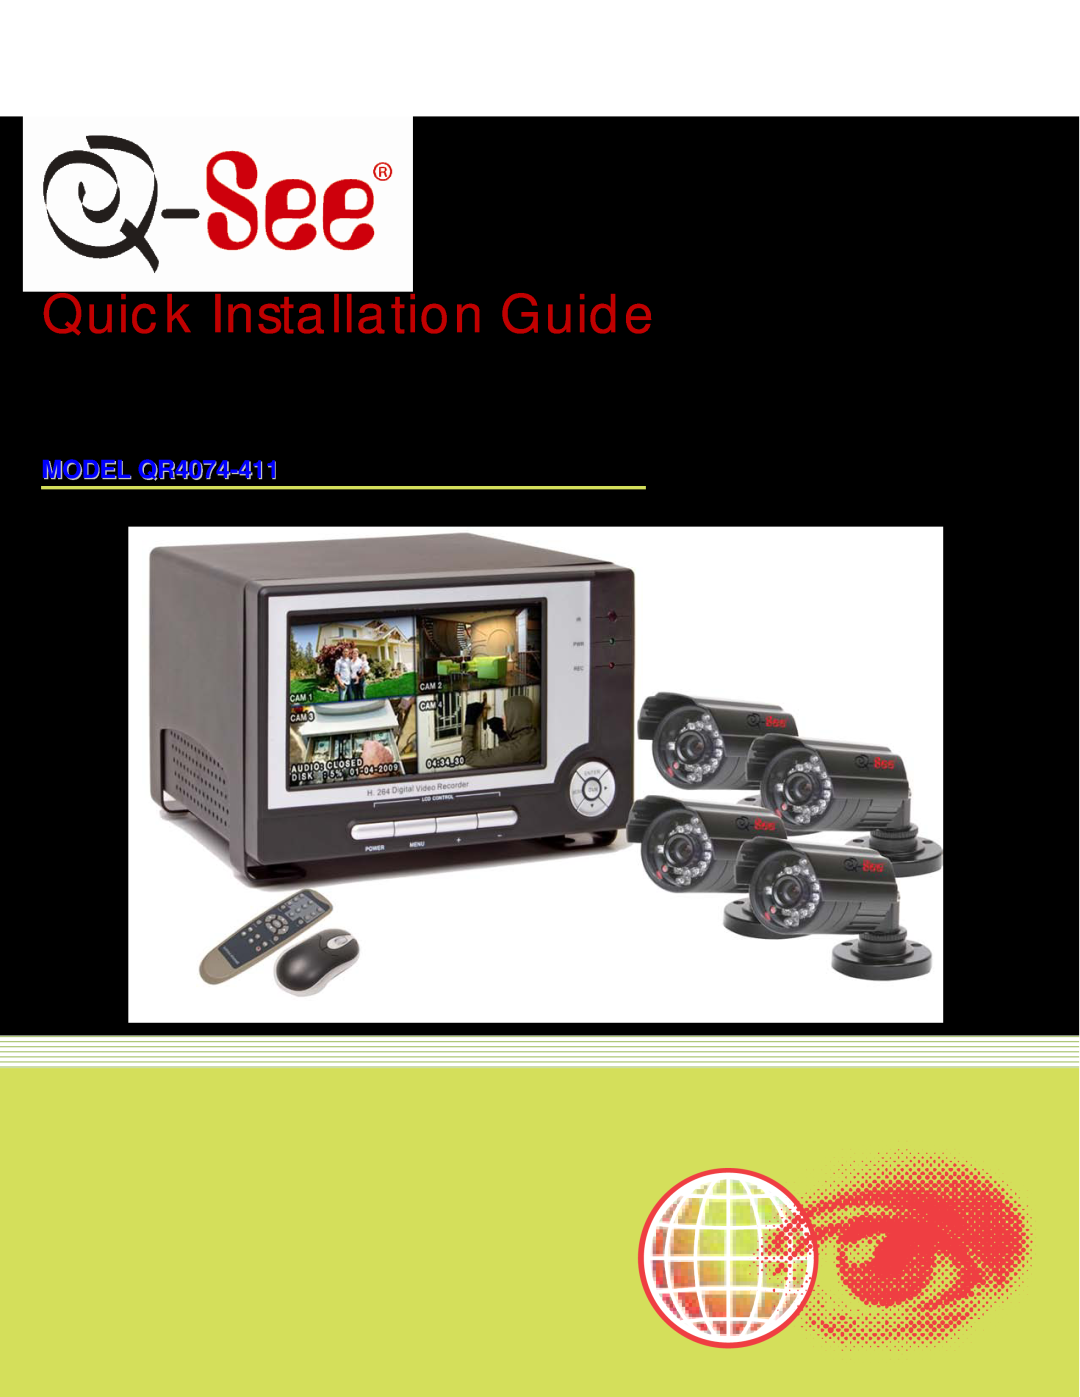 Q-See manual Quick Installation Guide, CIF Real-TimeRecording and, Color CMOS Camera Kits, MODEL QR4074-411 